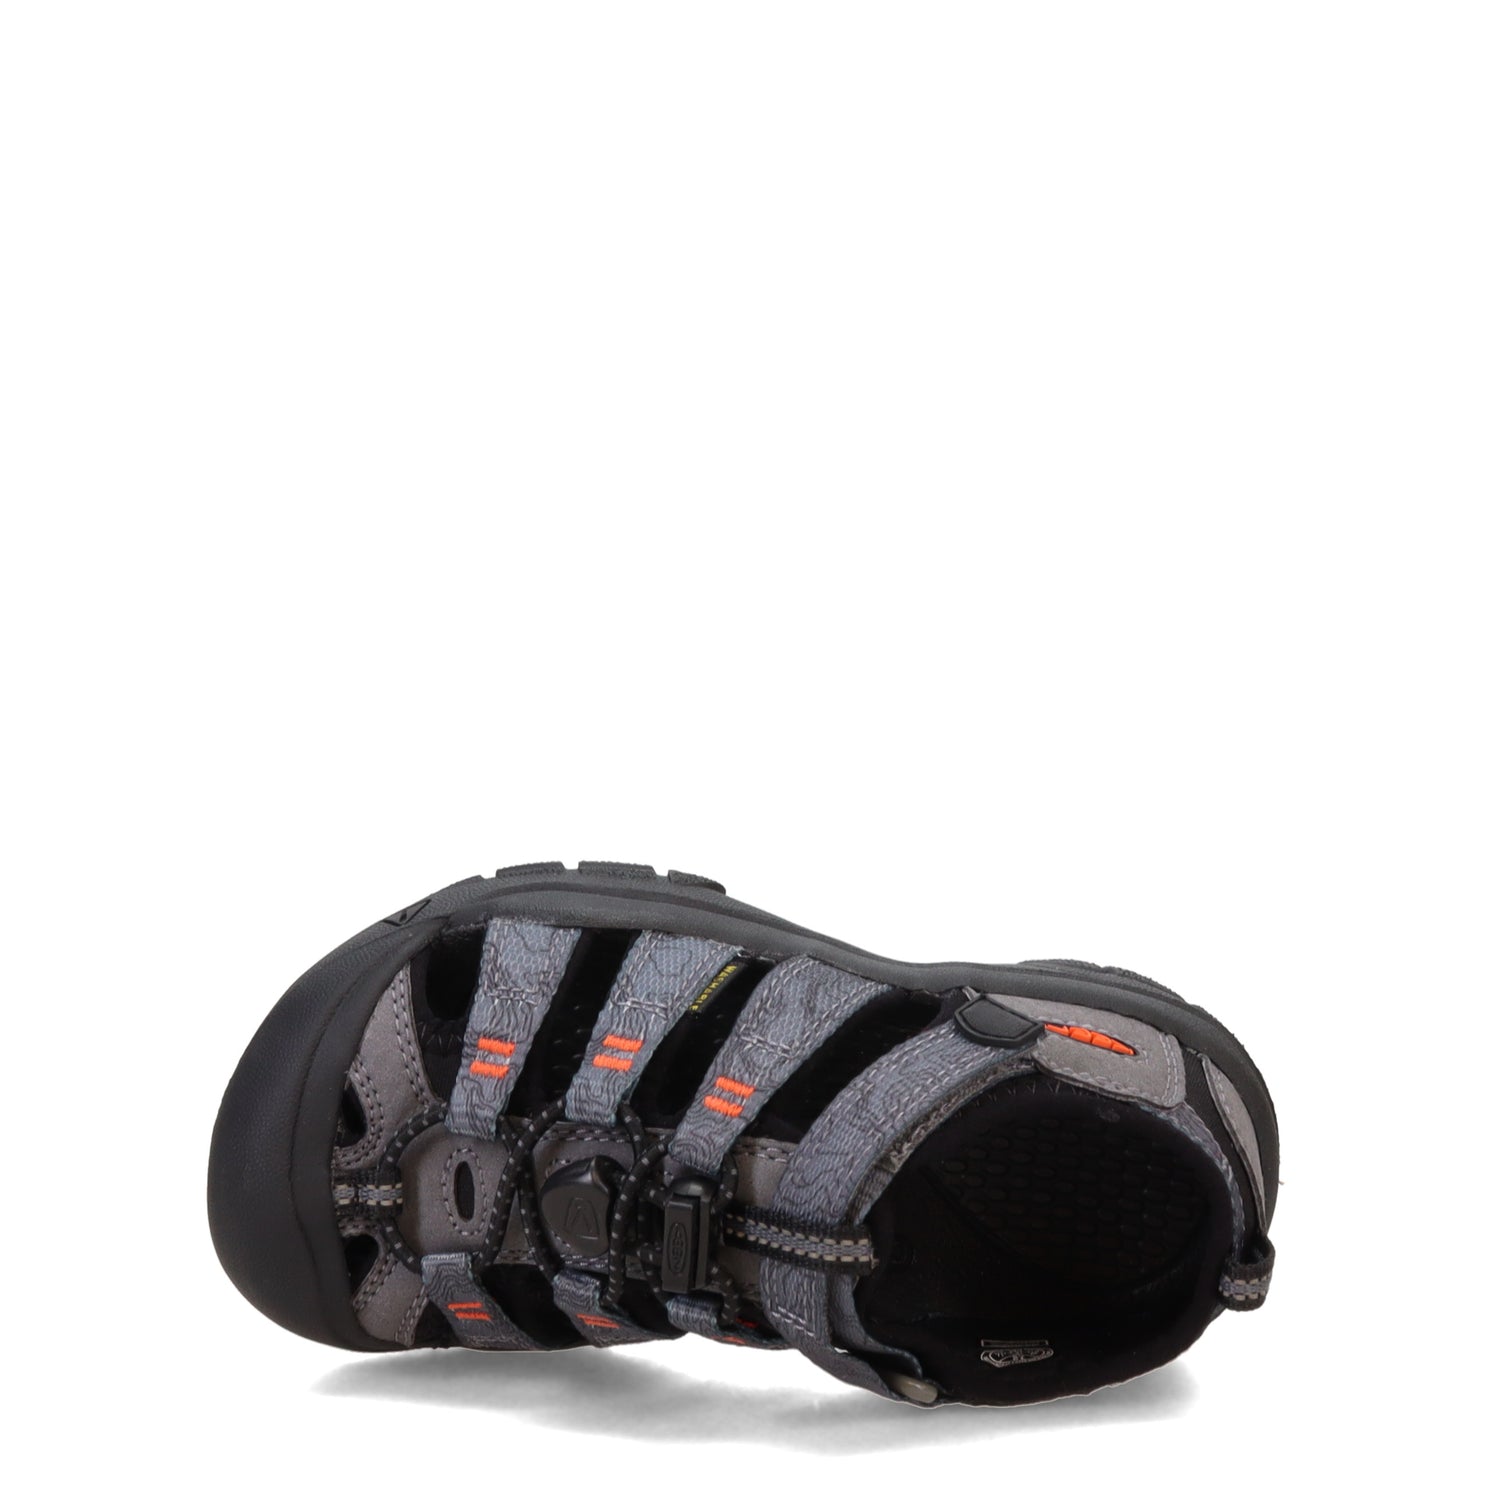 Peltz Shoes  Boy's KEEN Newport H2 Waterproof Sandal - Toddler & Little Kid Steel Grey/Black 1026268